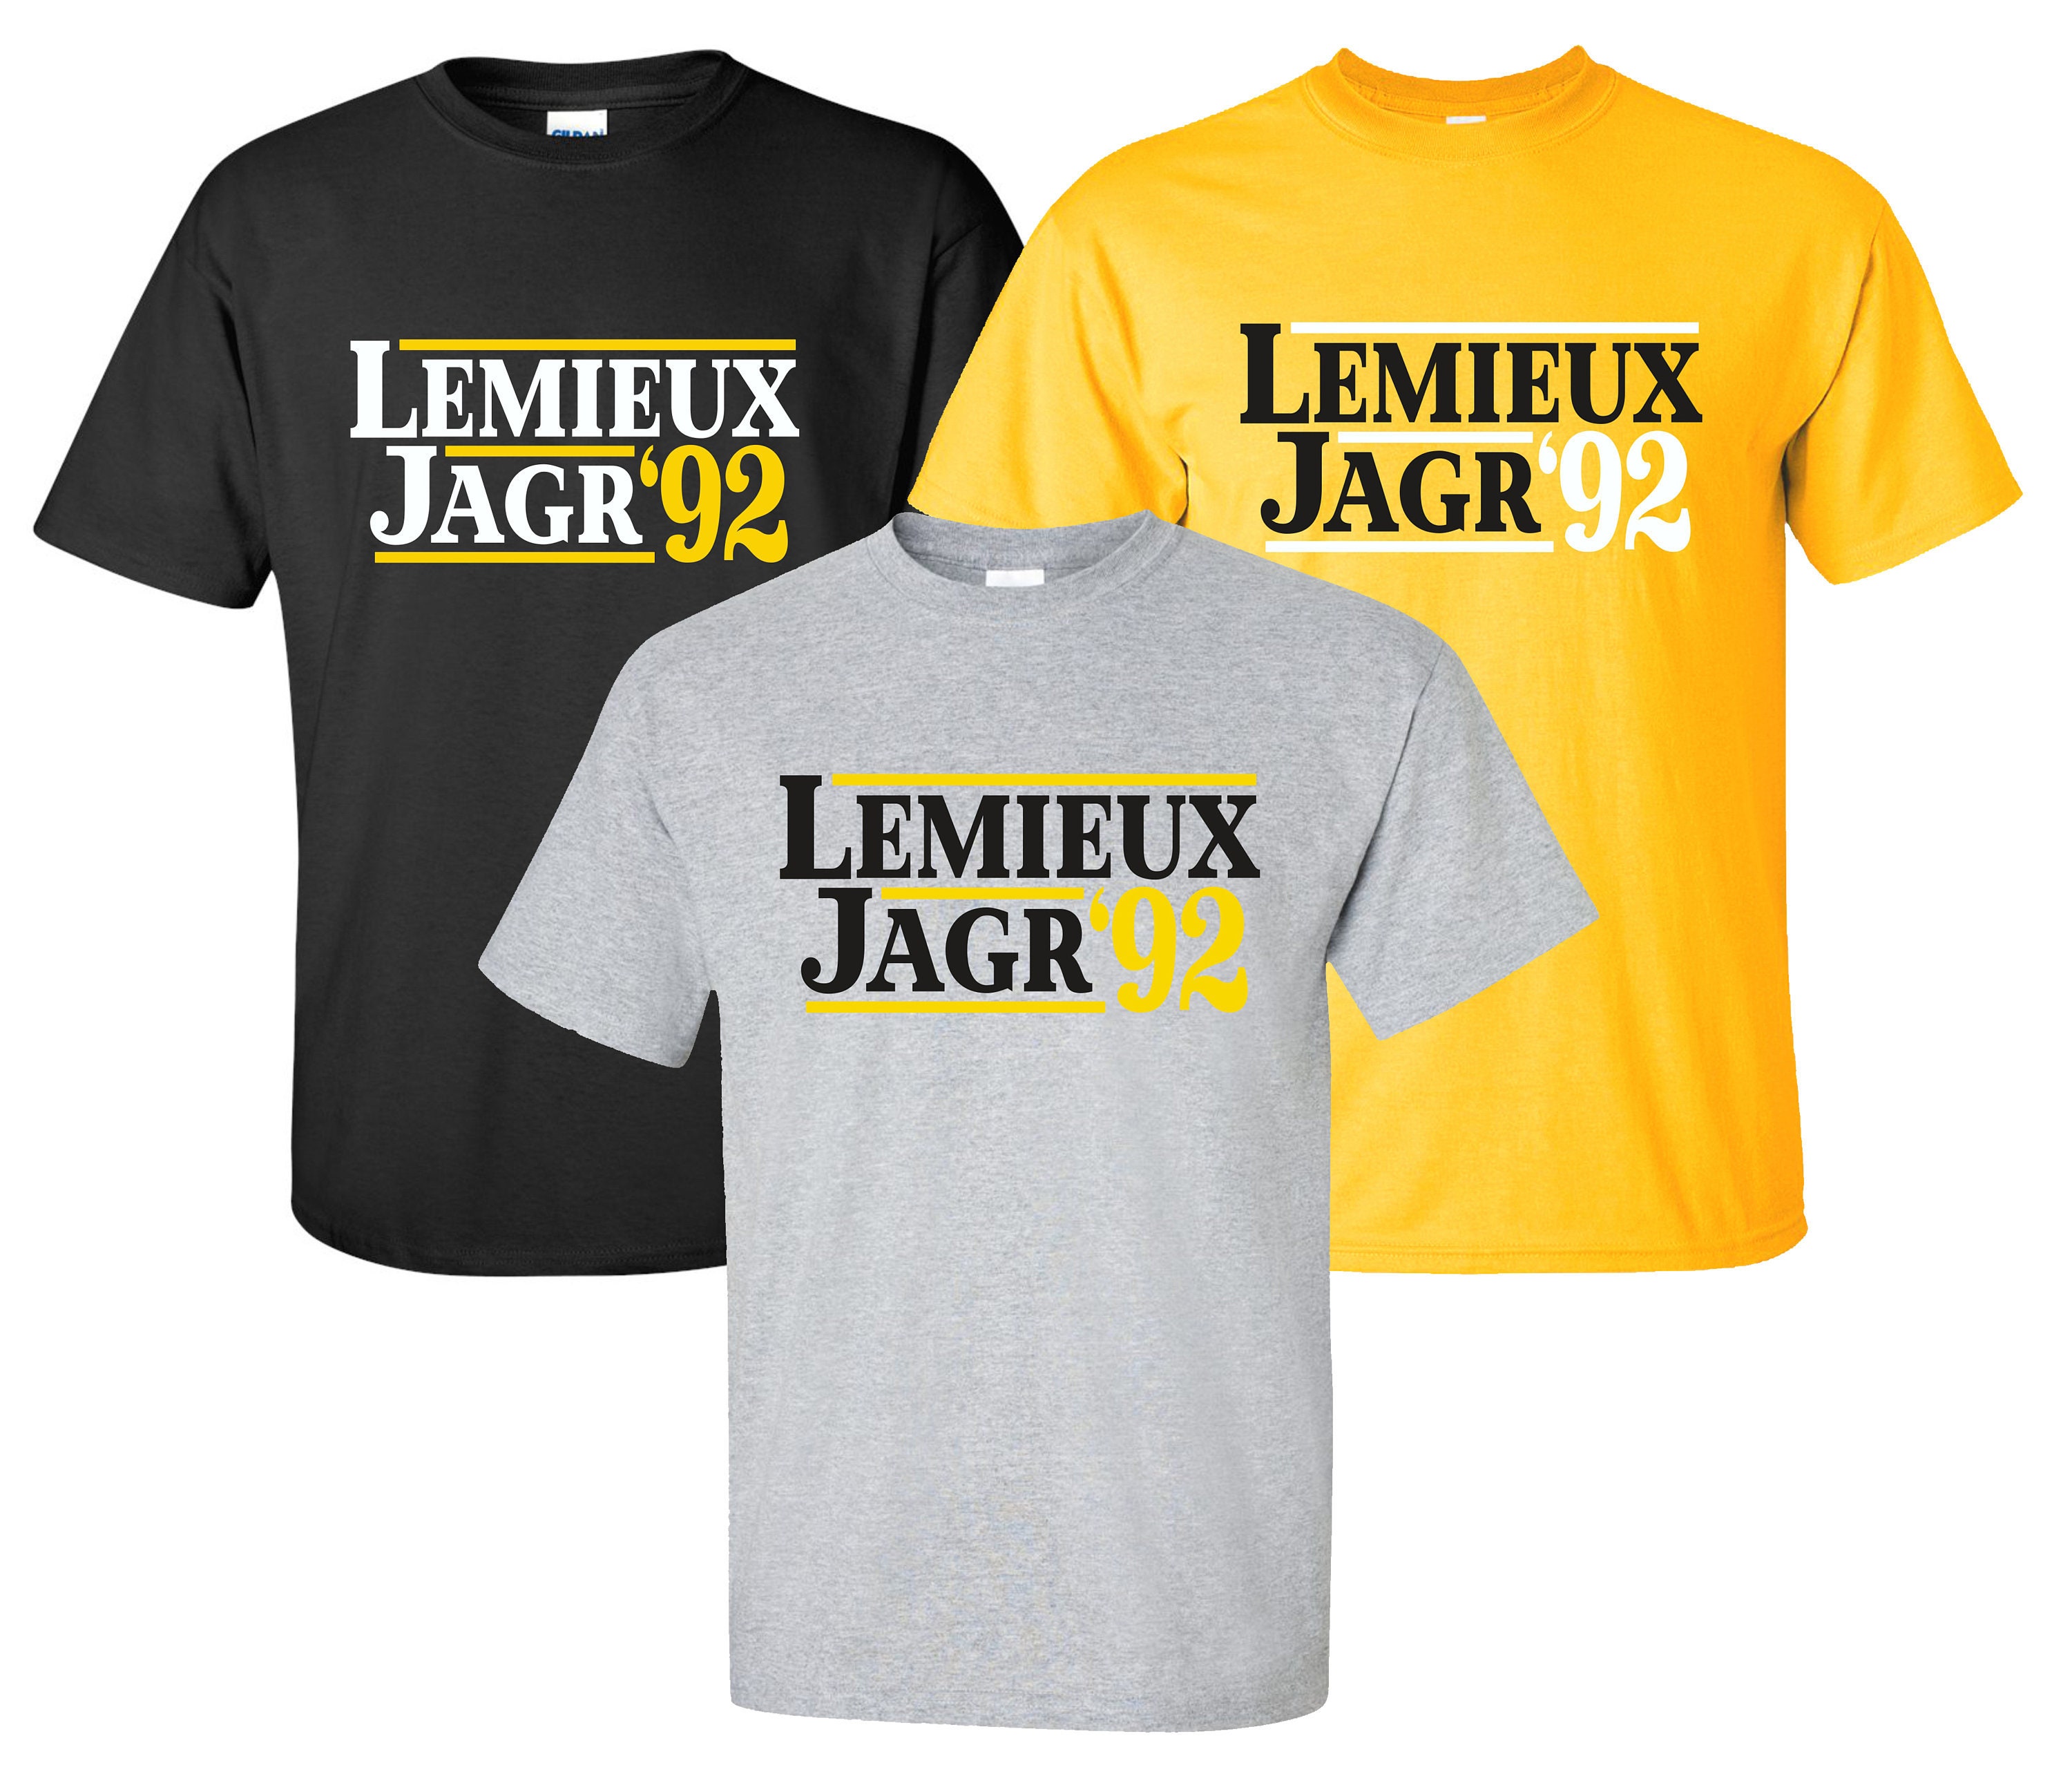 Men's Pittsburgh Penguins #68 Jaromir Jagr Jersey Black Vintage Throwback  Yellow CCM Authentic Jaromir Jagr Hockey Jersey M-XXXL - AliExpress